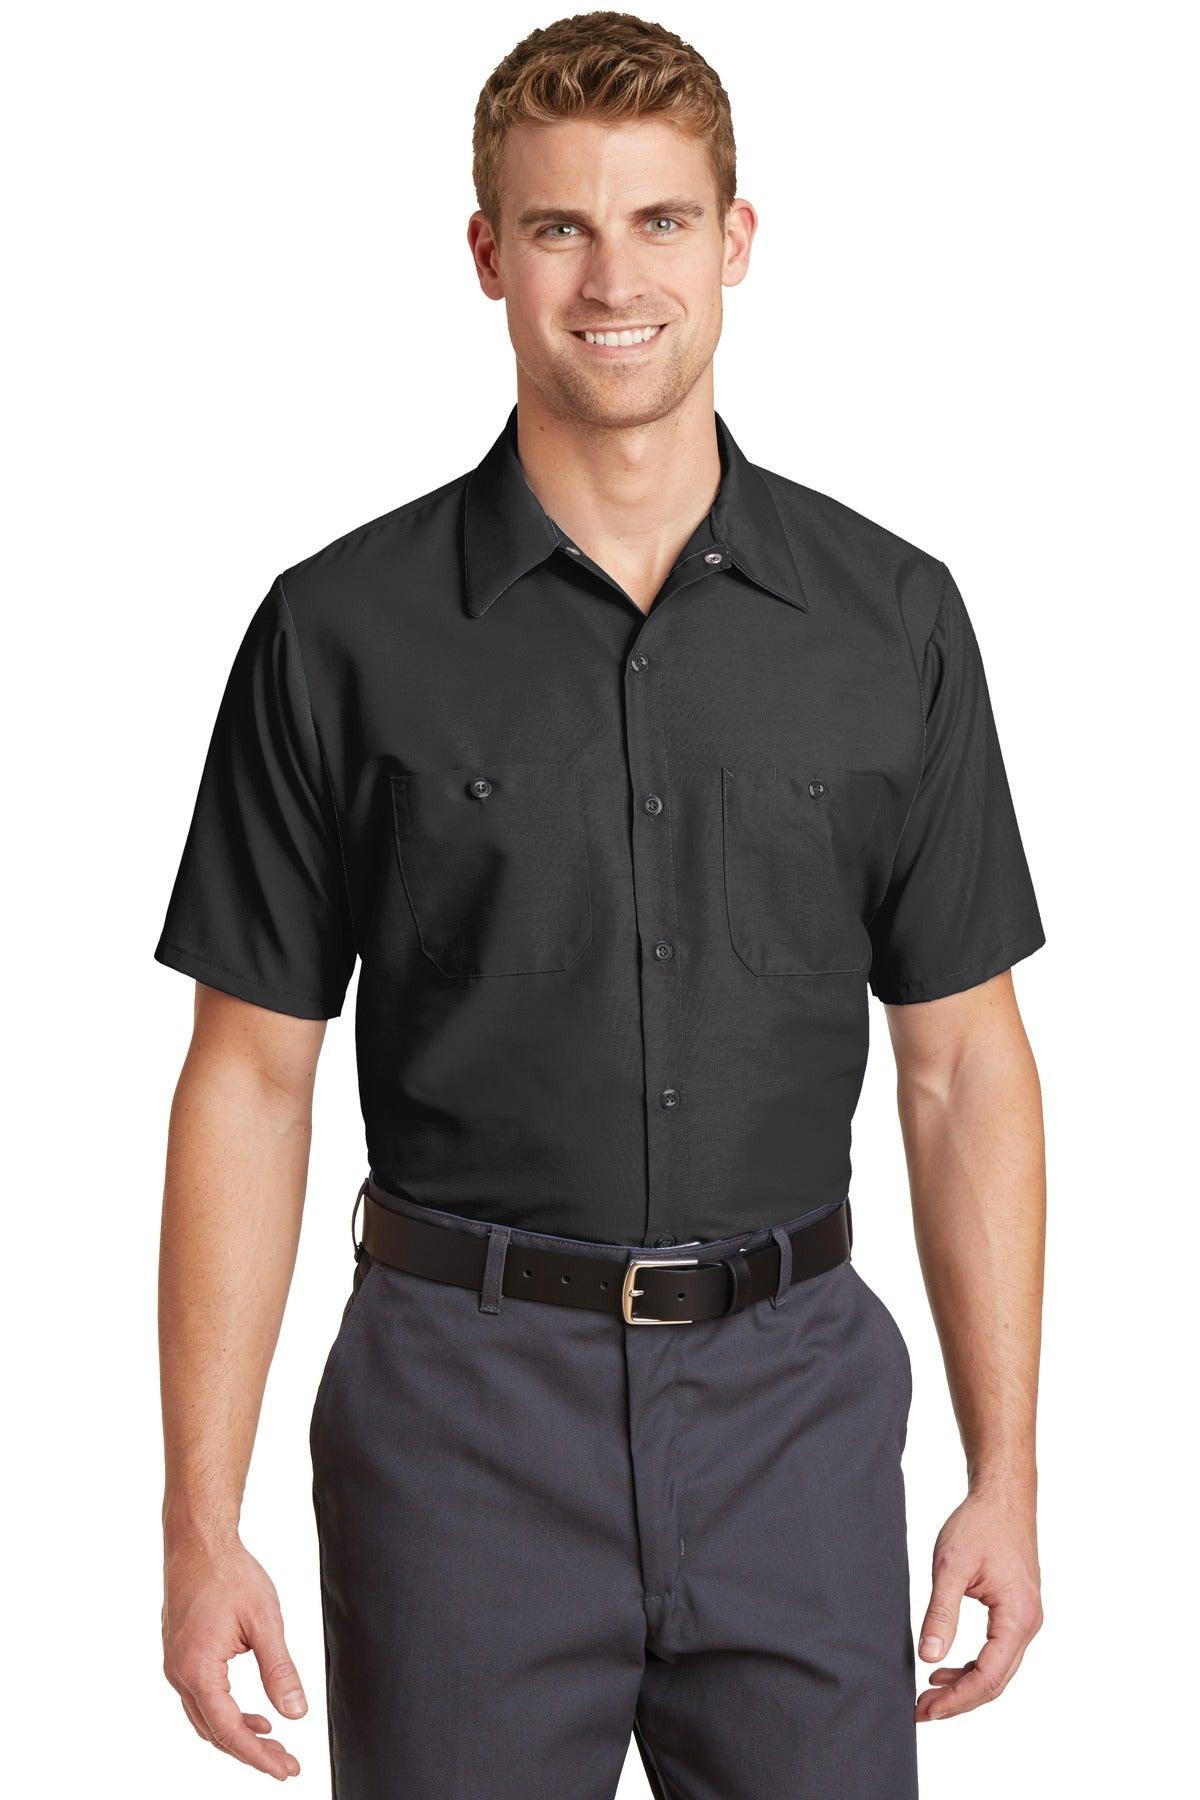 Red Kap Short Sleeve Industrial Work Shirt. SP24 - Dresses Max